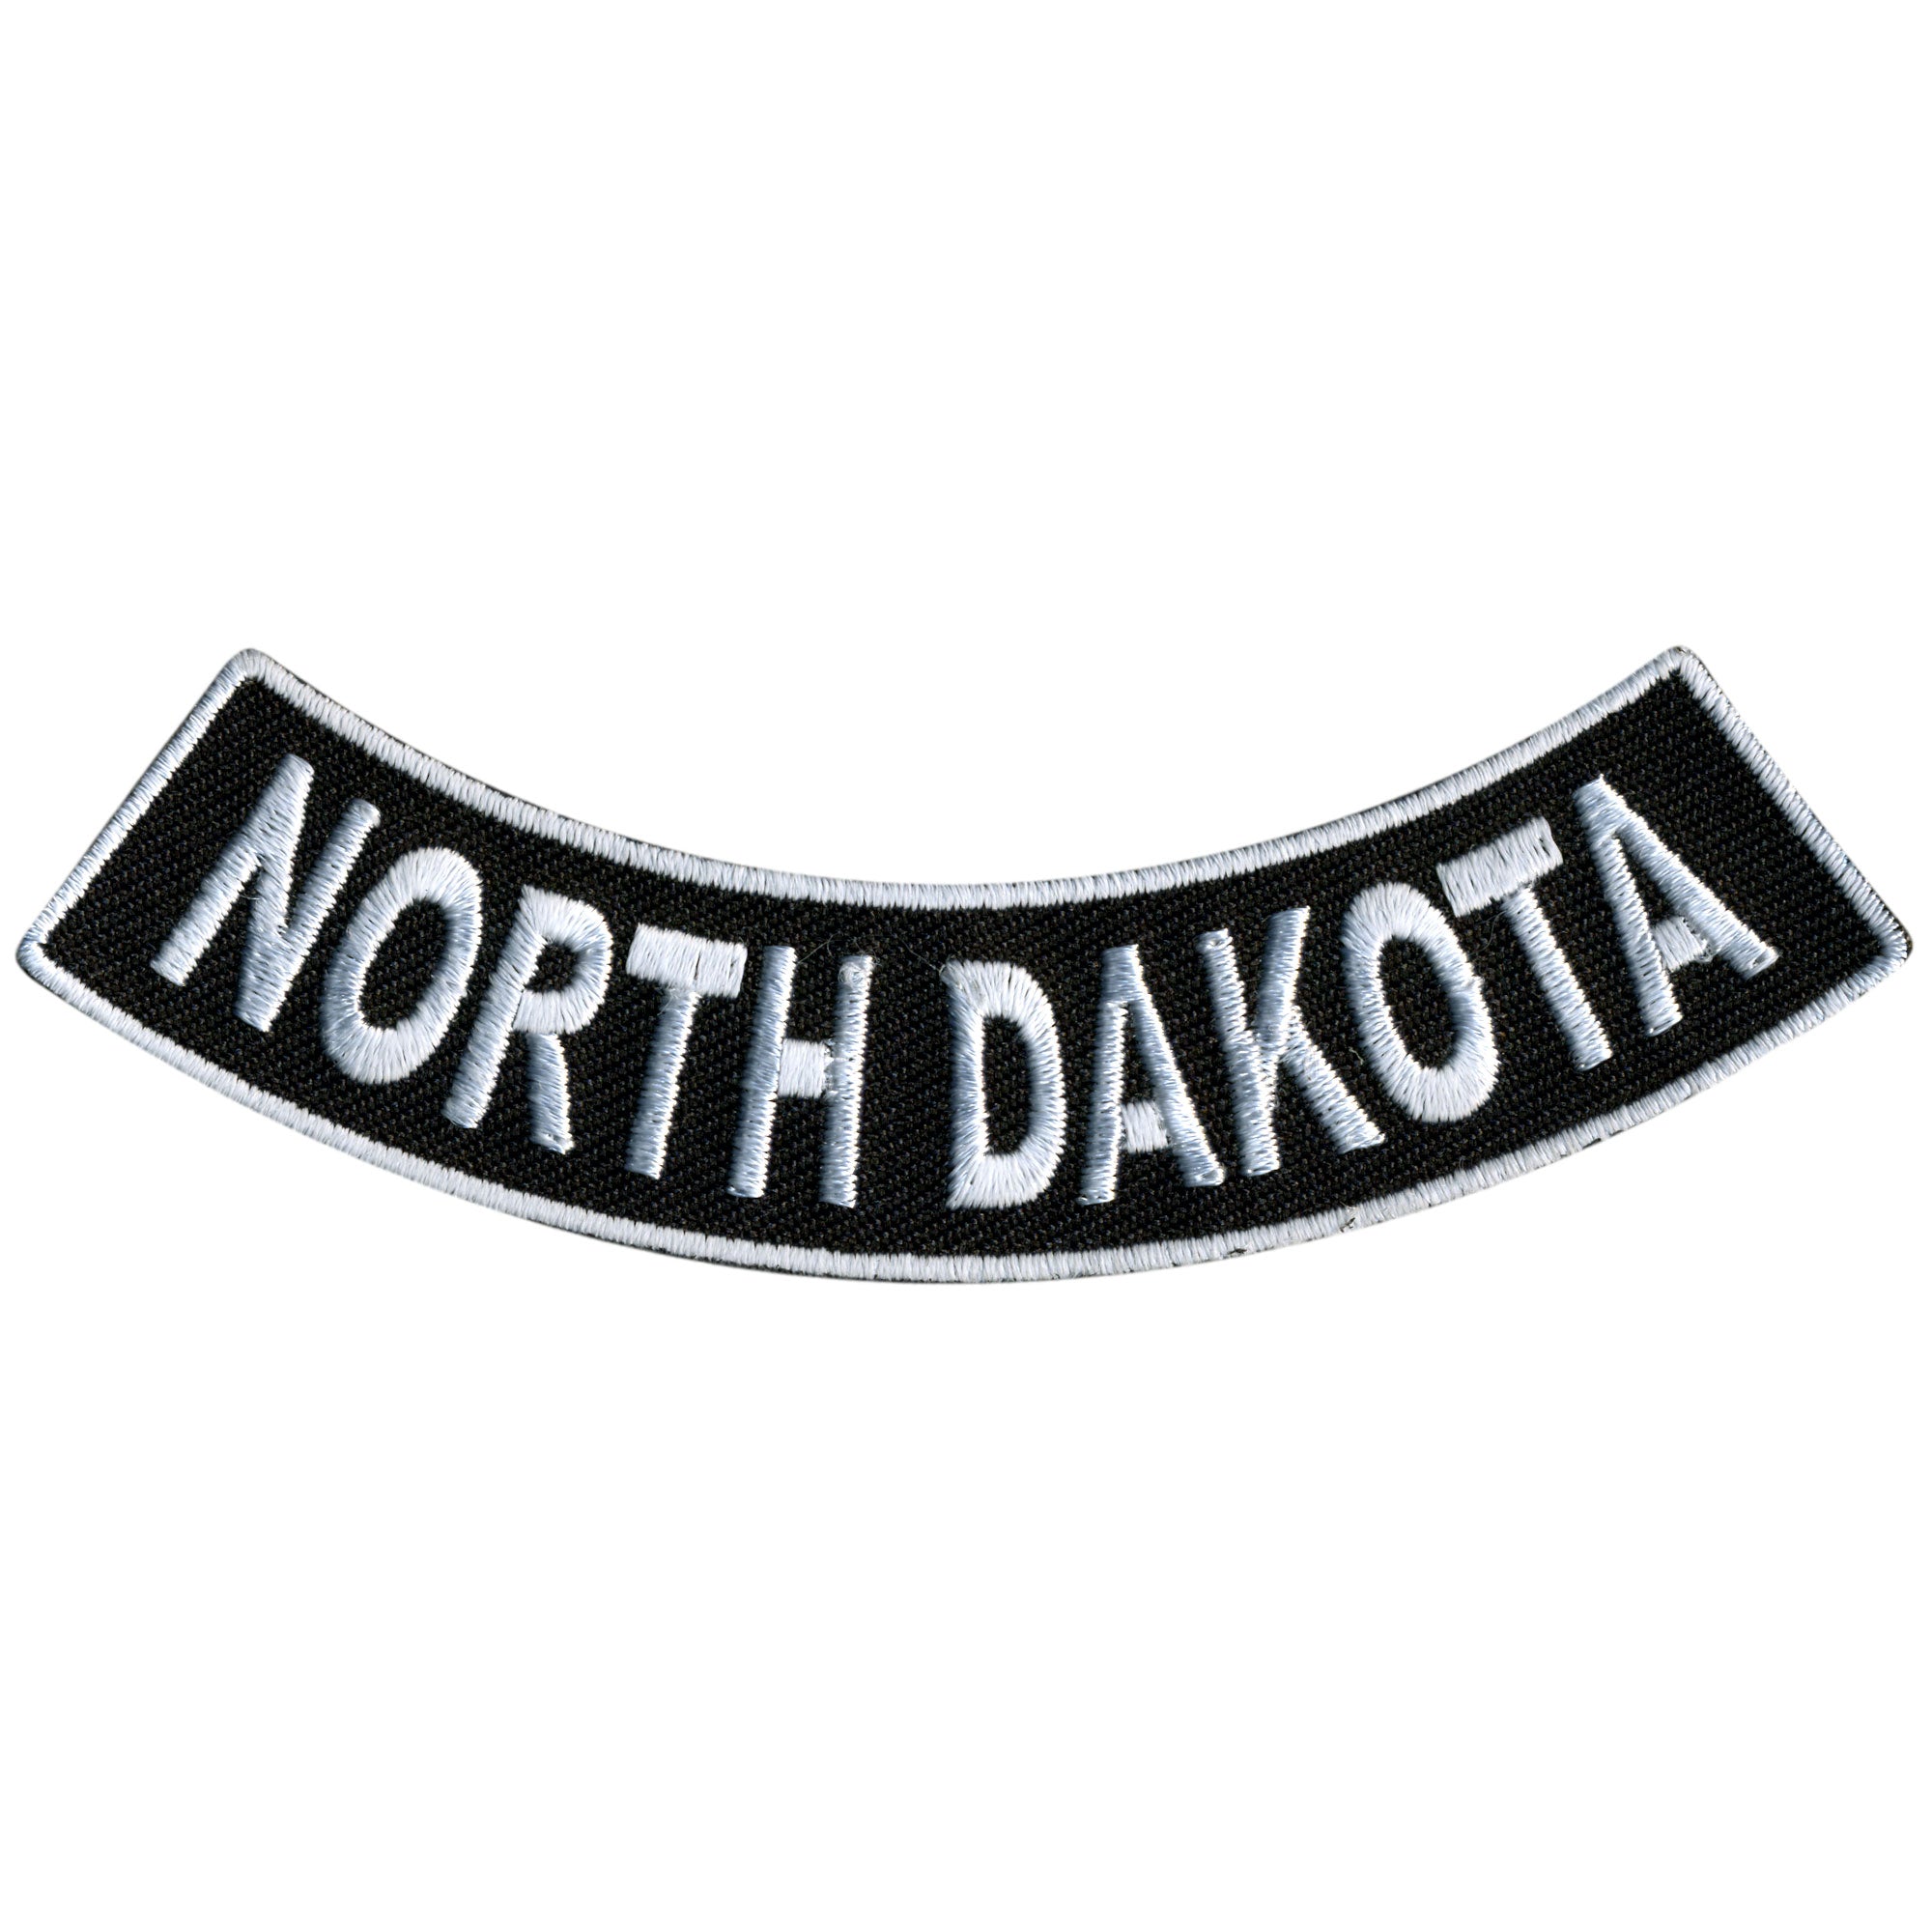 Hot Leathers North Dakota 4” X 1” Bottom Rocker Patch